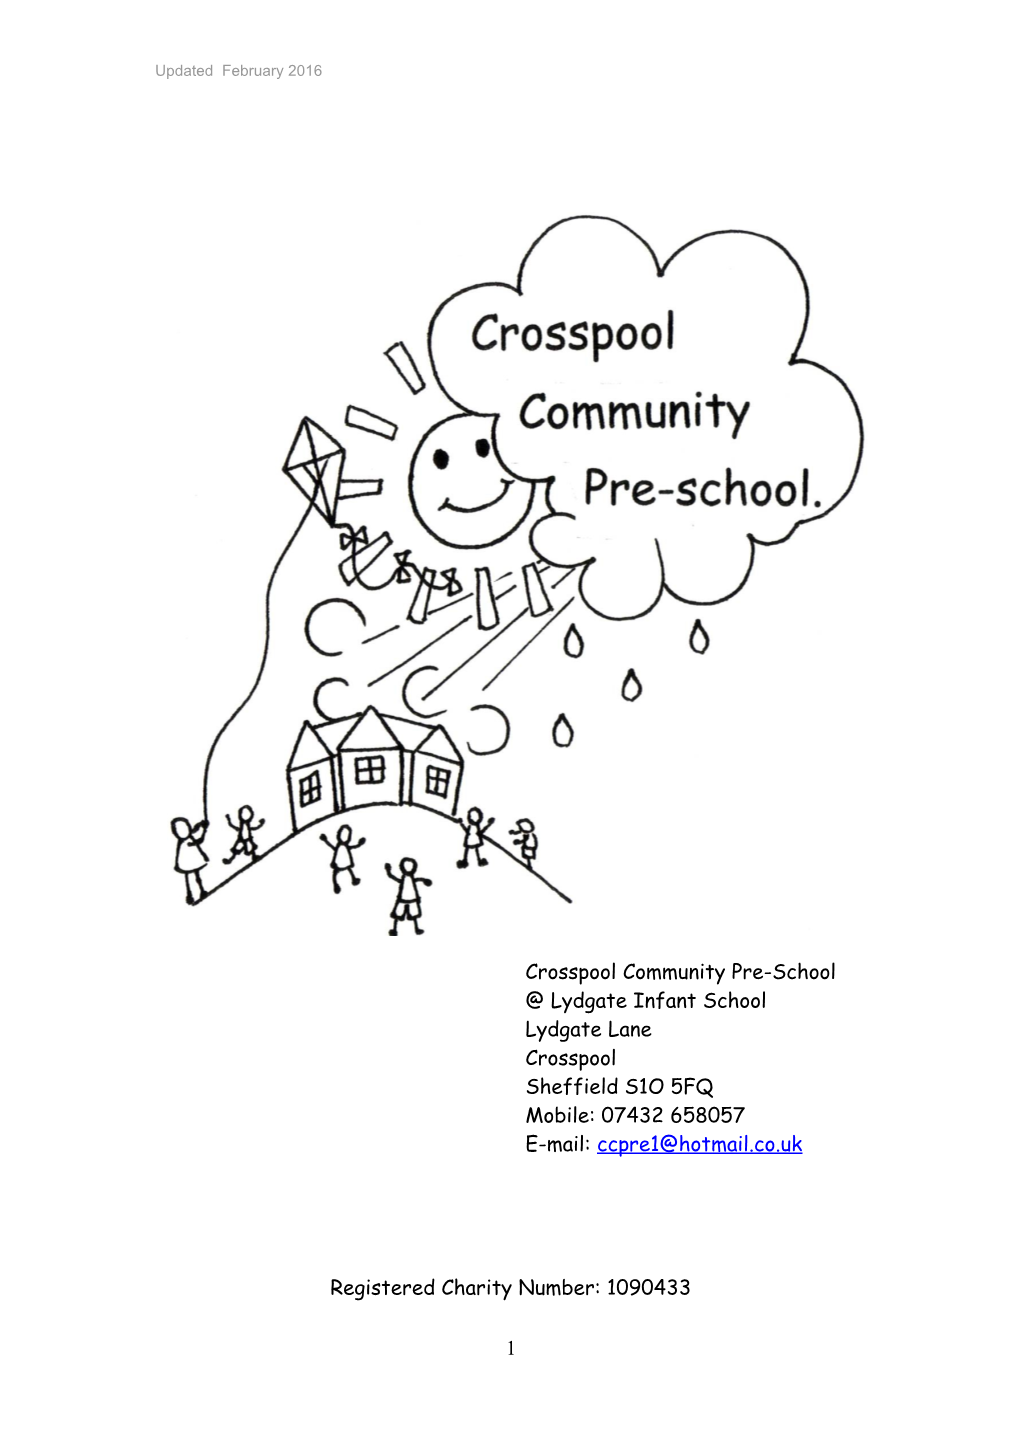 Welcome to Crosspool Community Preschool